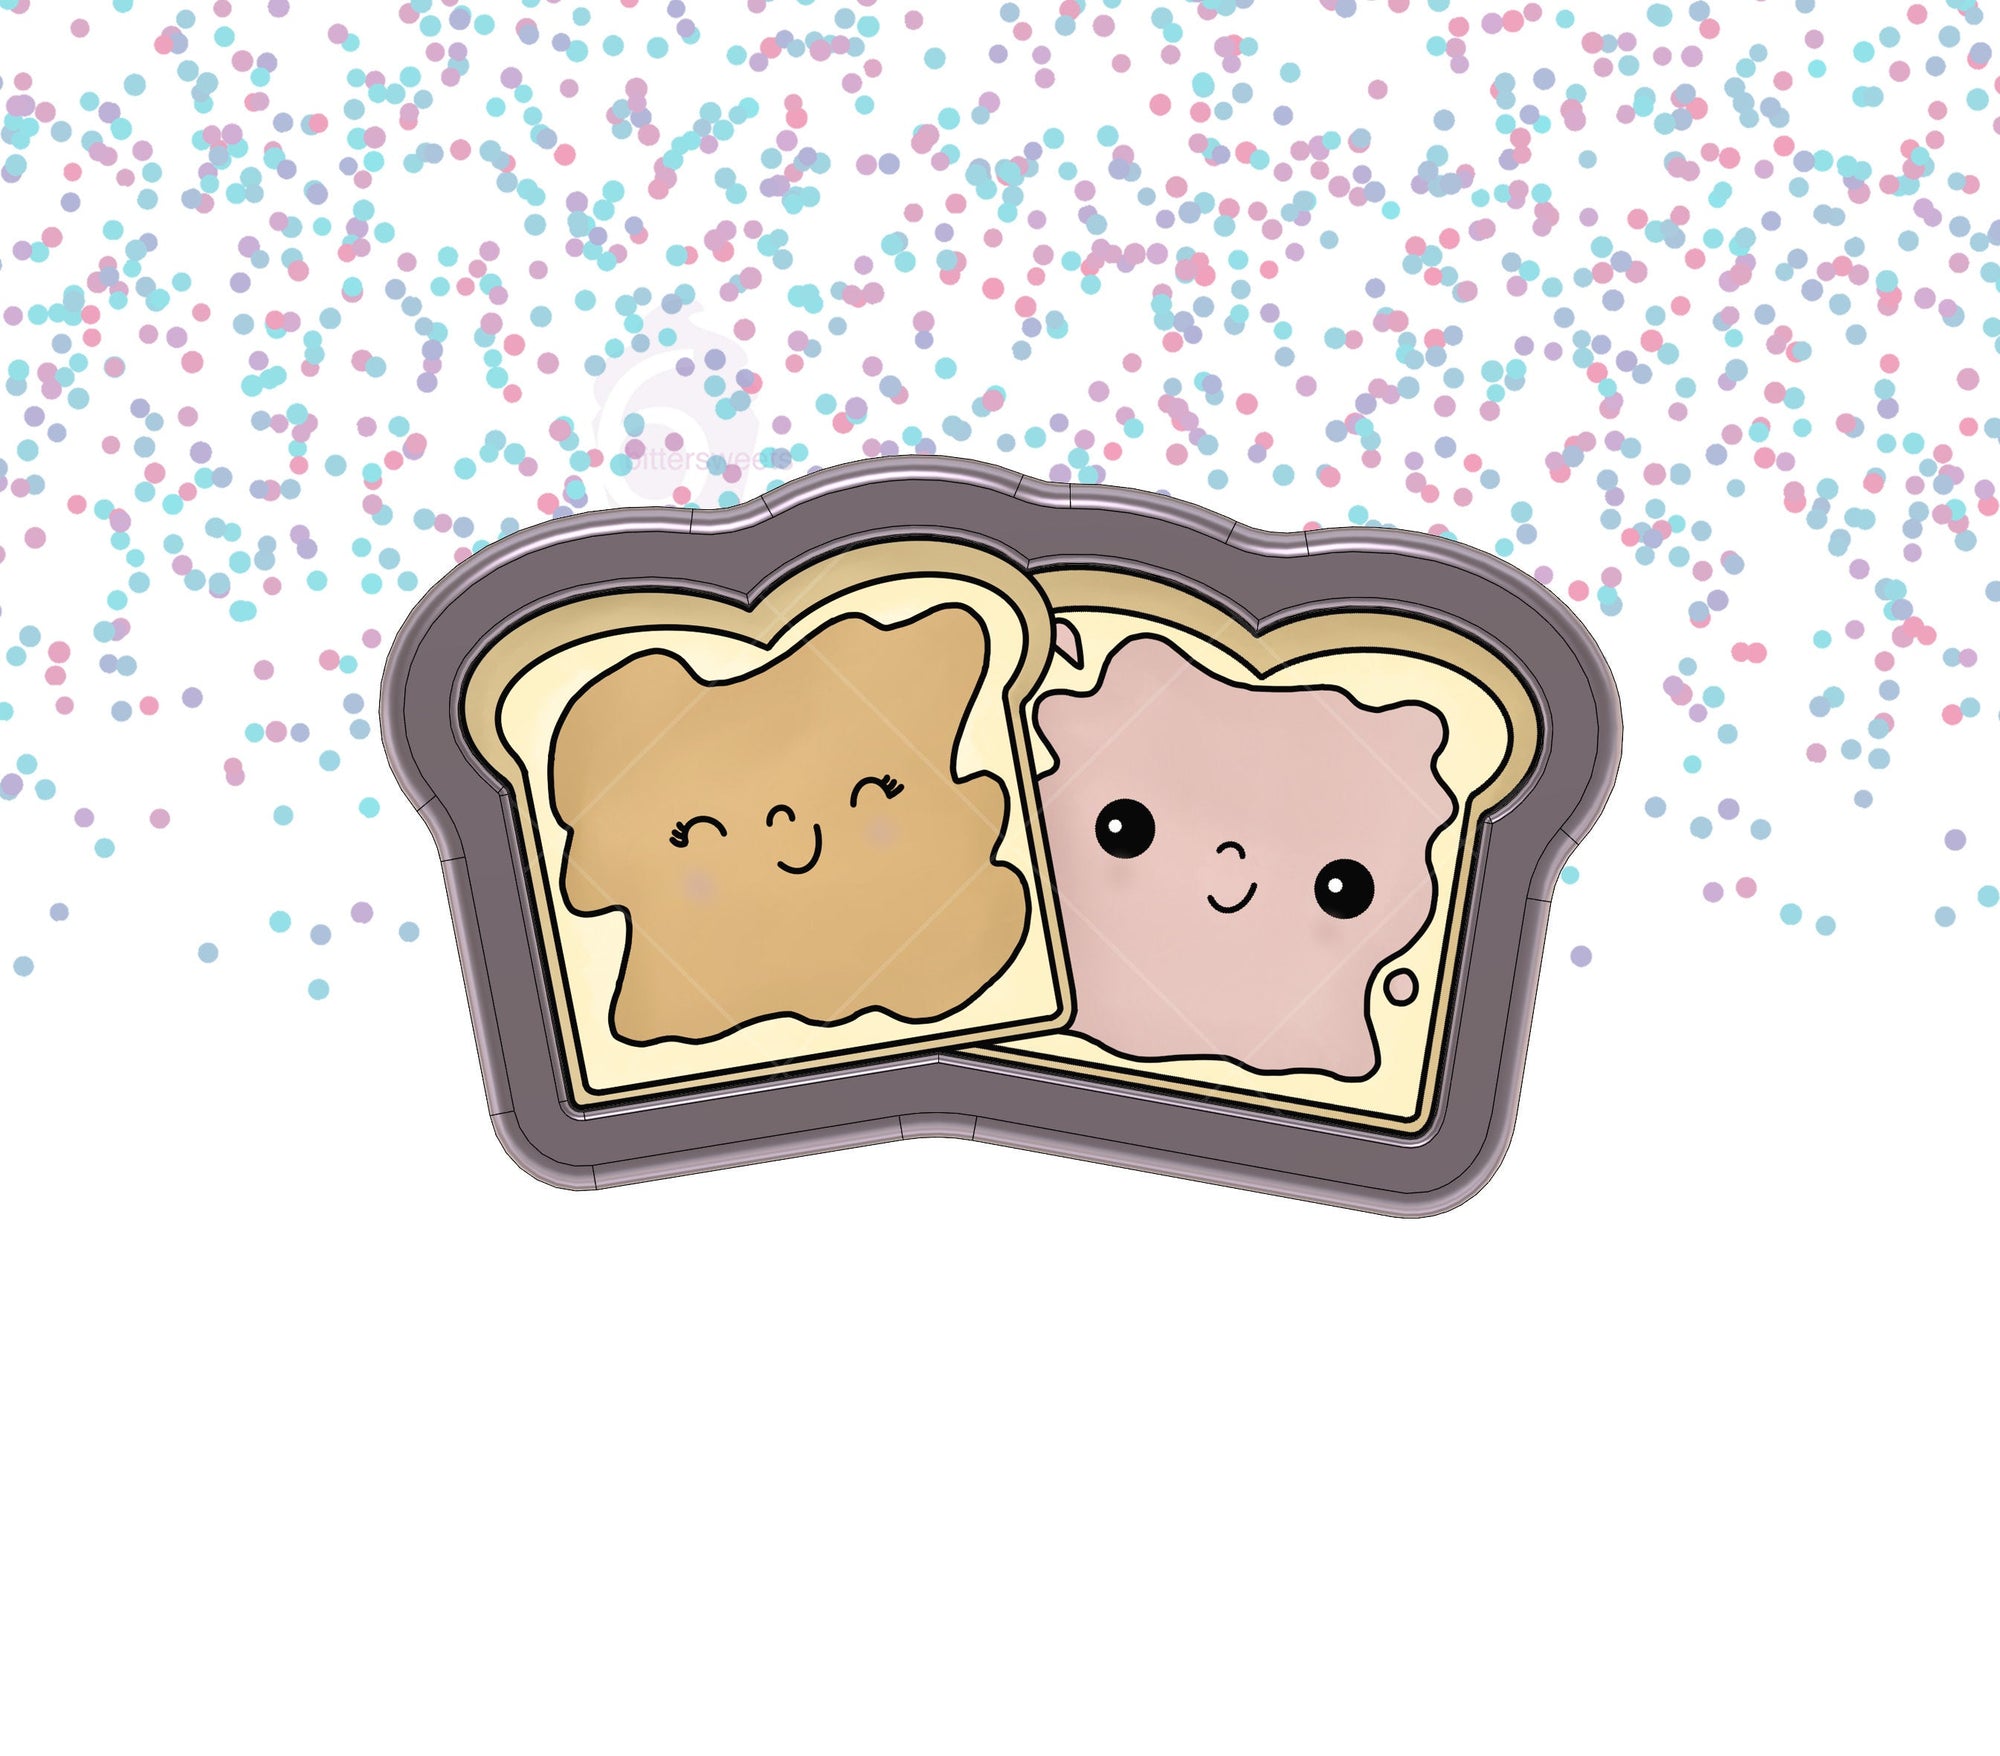 Cute PB & J On Bread Cookie Cutter